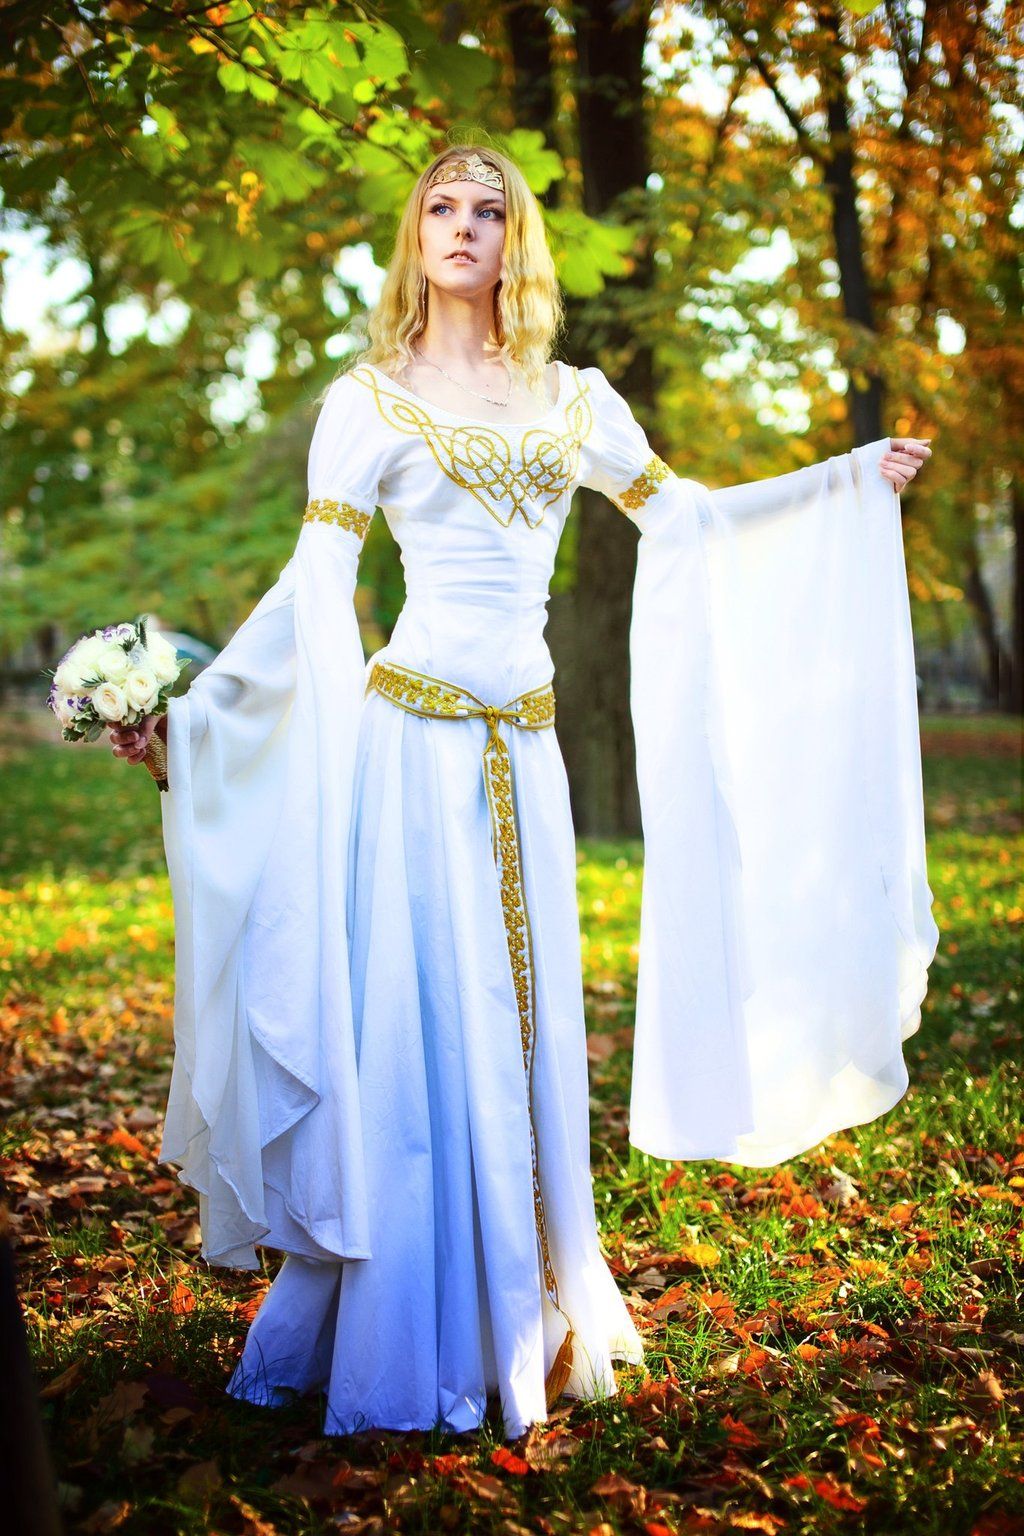 déguisement jeune mariée médiévale Halloween carnaval